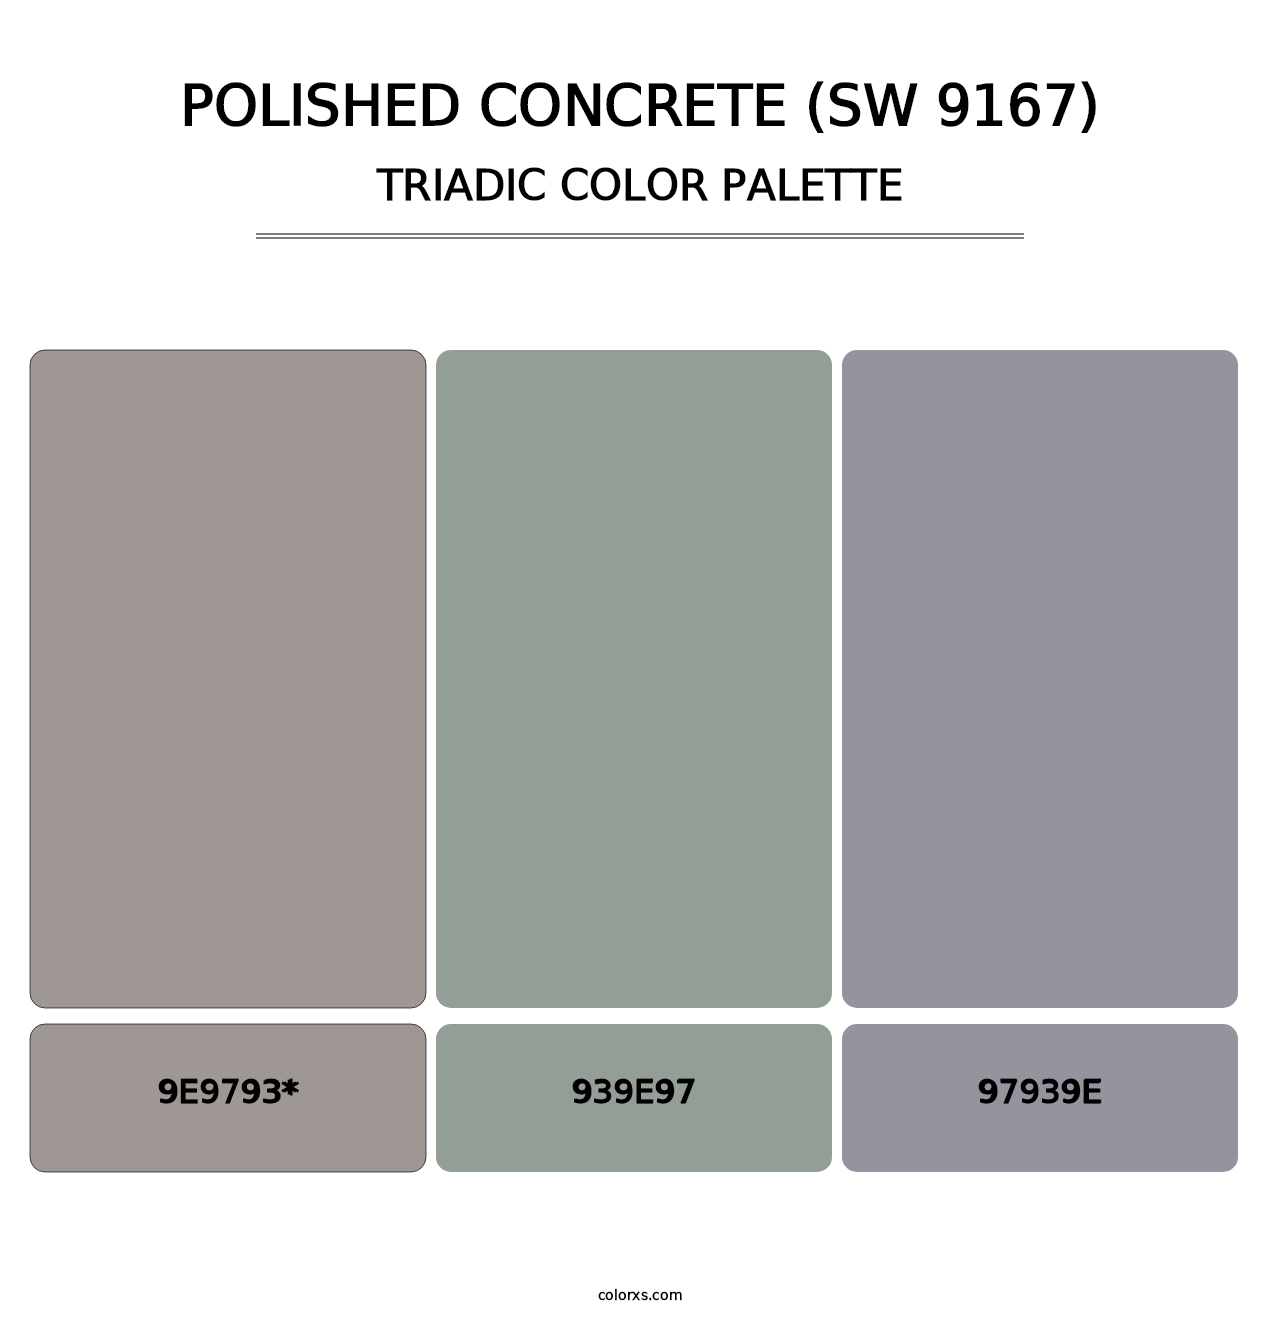 Polished Concrete (SW 9167) - Triadic Color Palette